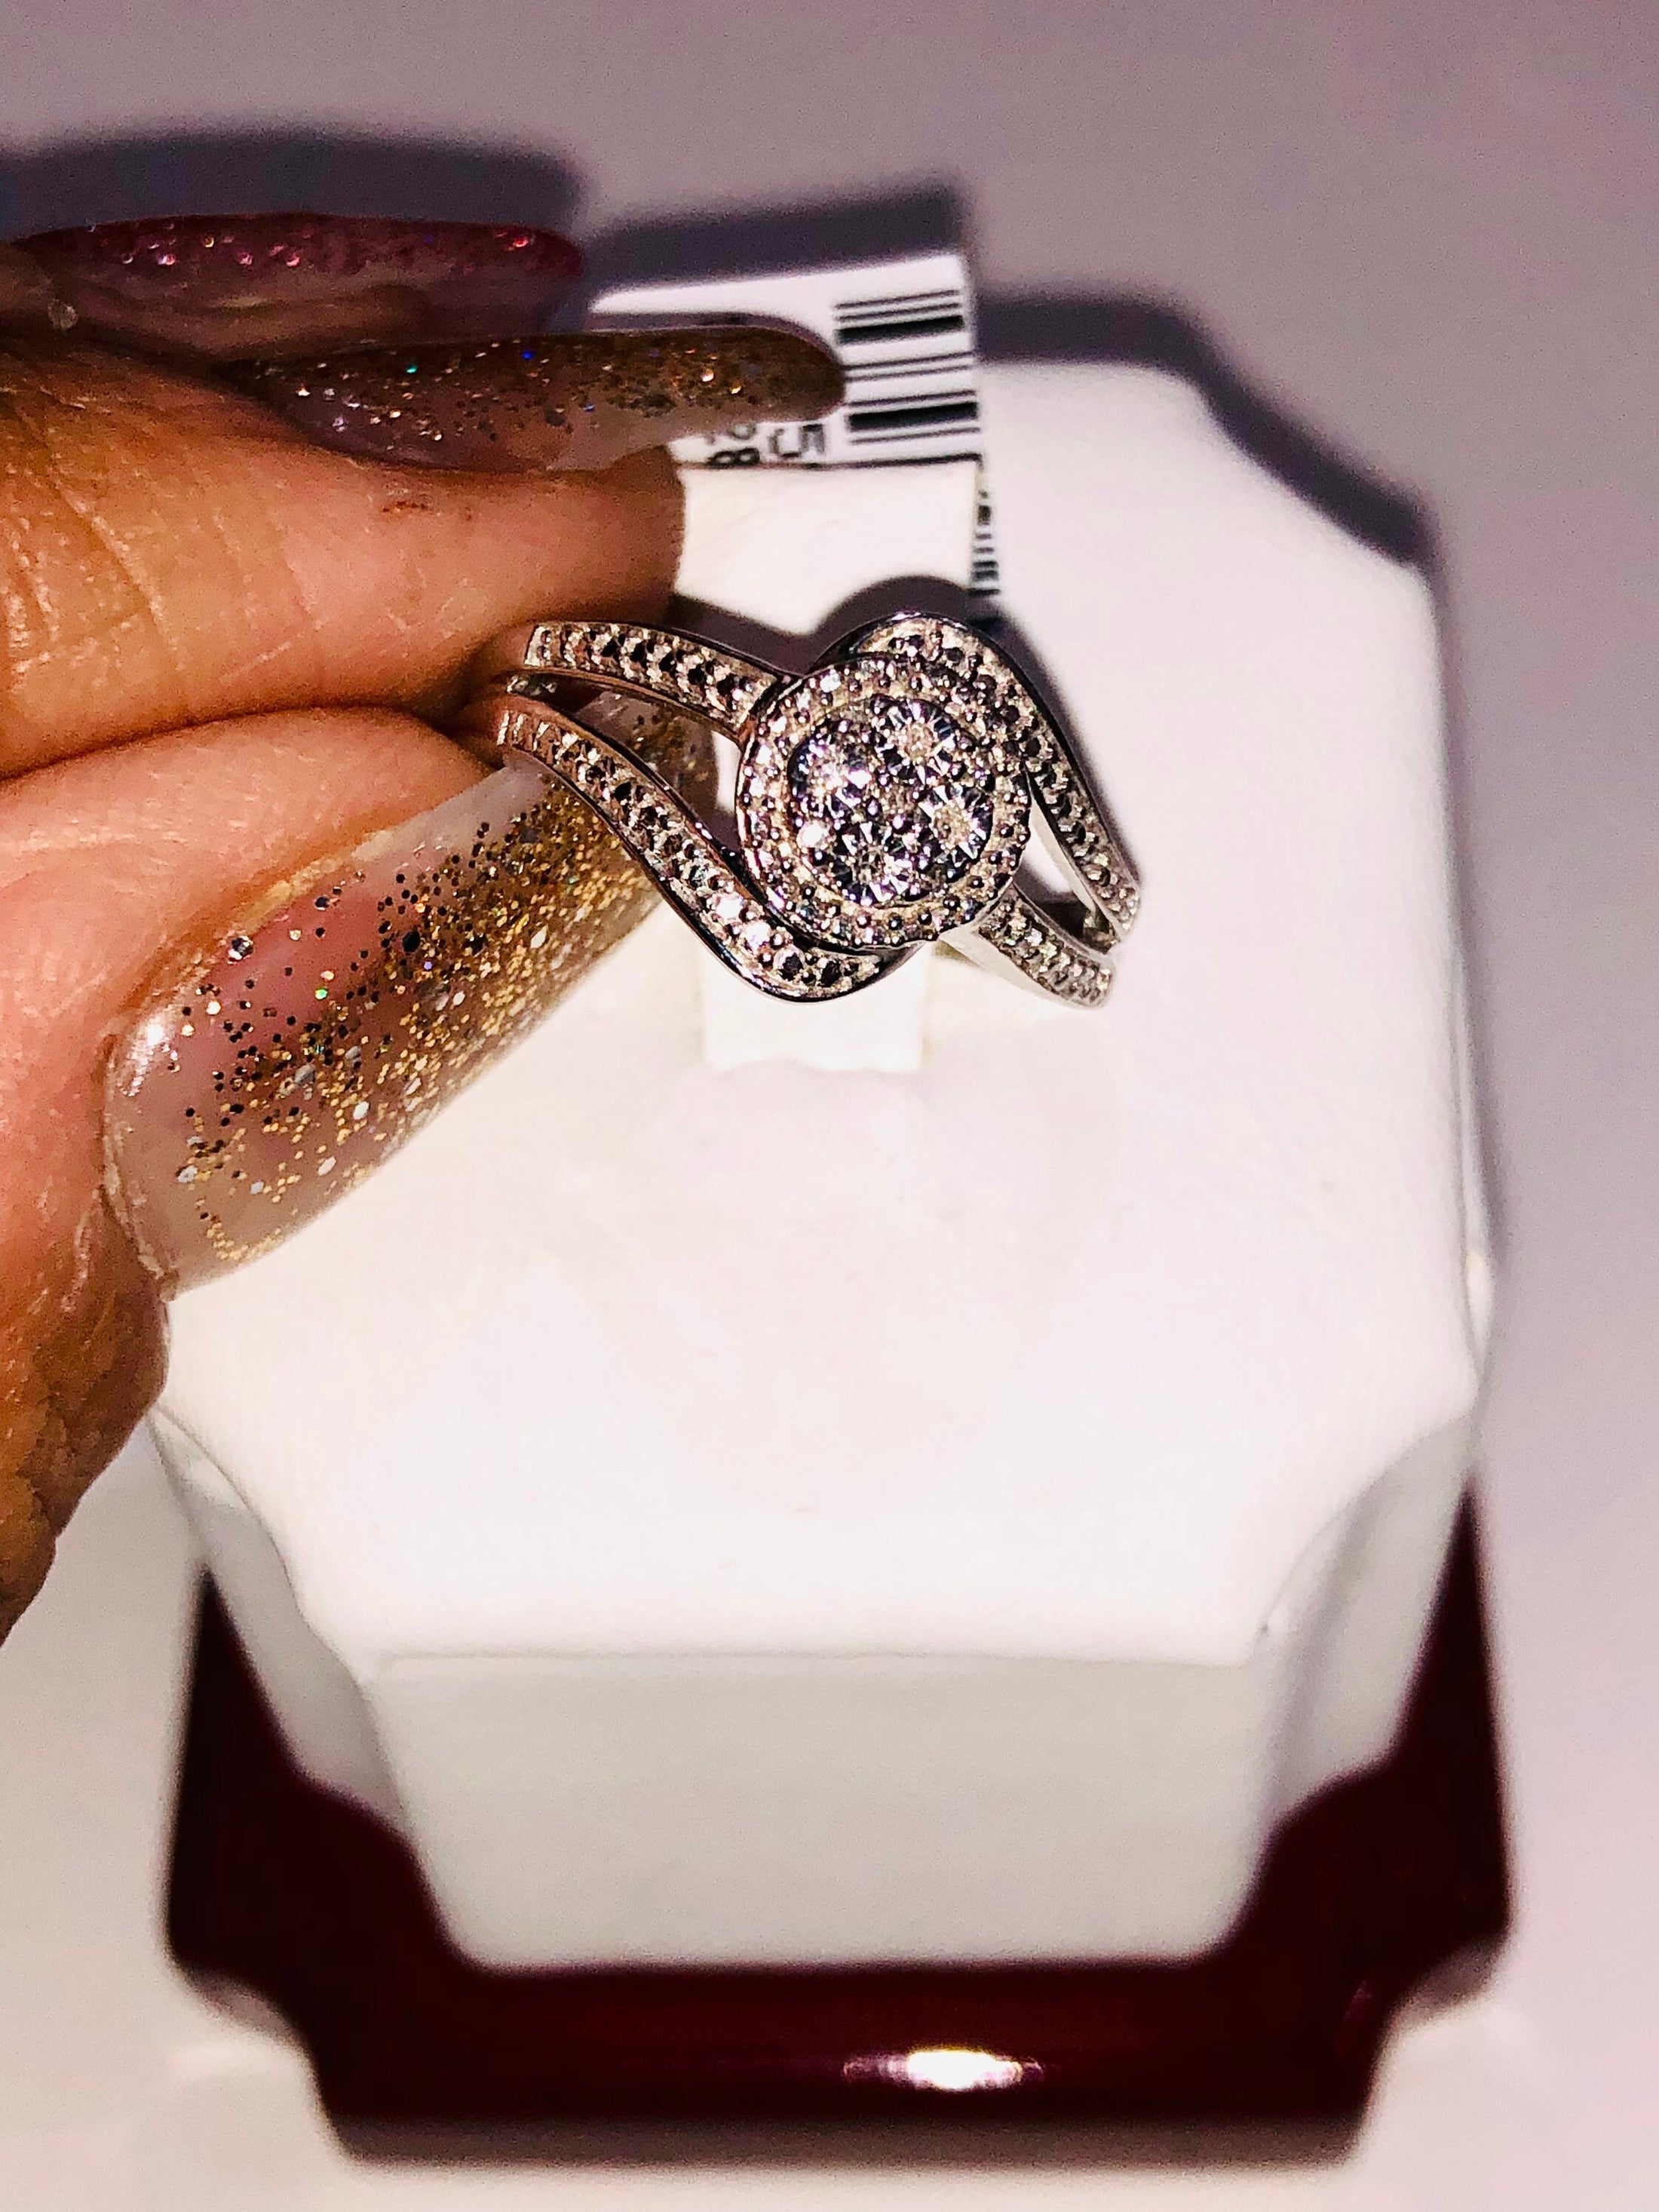 Real genuine natural diamond promise ring - engagement ring- wedding ring- anniversary birthday gift beautiful huge sale 100% real diamonds